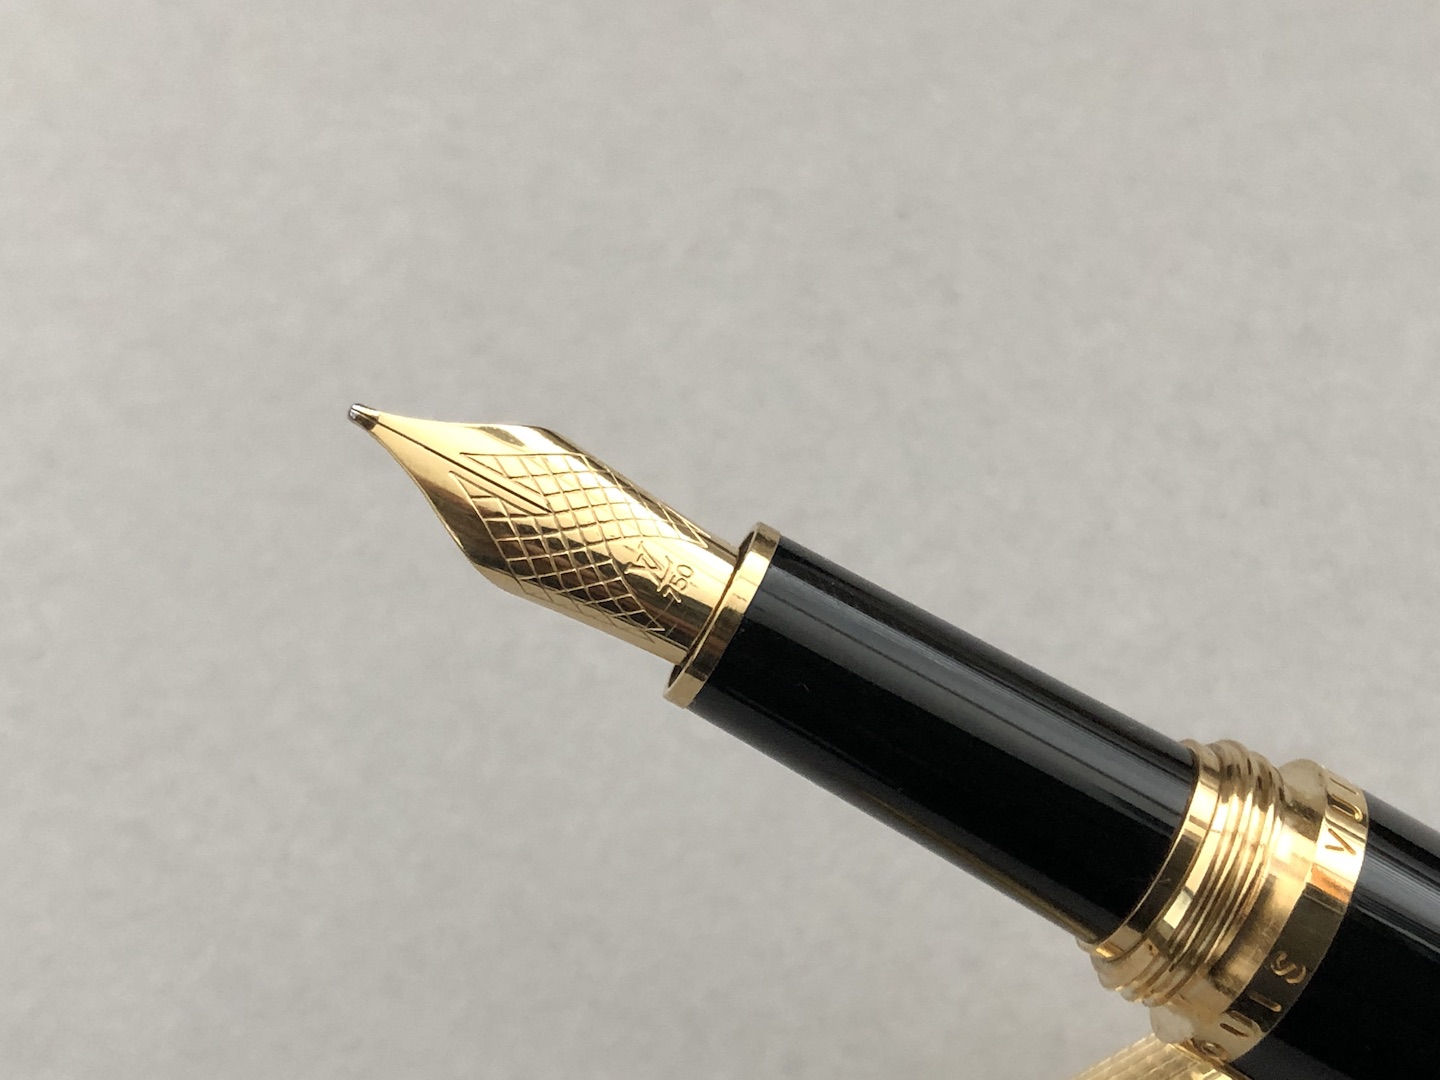 LouisVuitton Fountain Pen. Small pen tip 750. Dock leather. 18k yellow gold